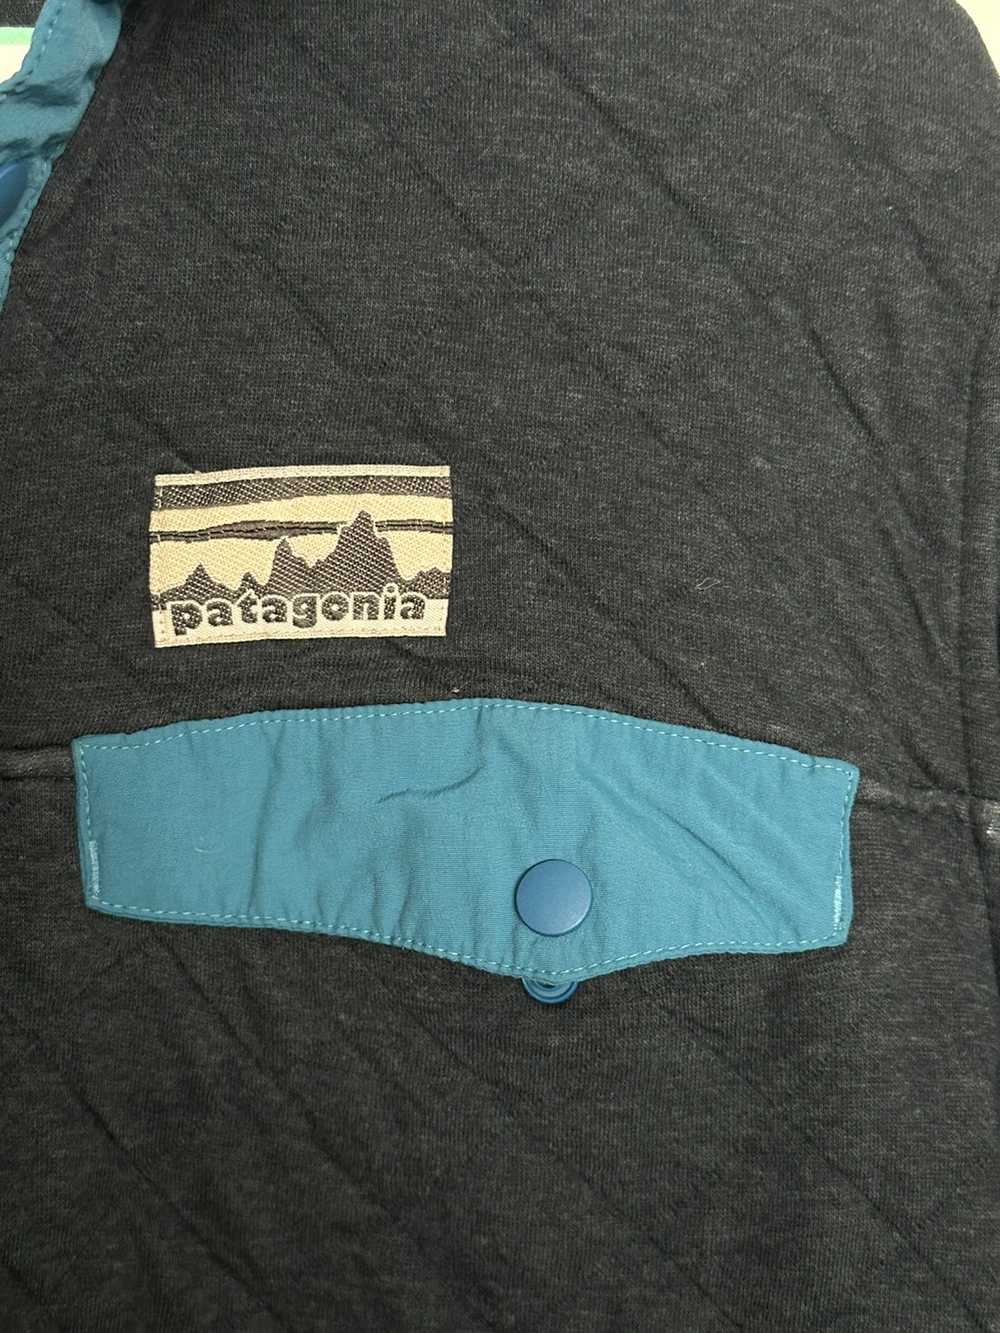 Patagonia Patagonia Quilted T Snap Jacket - image 4